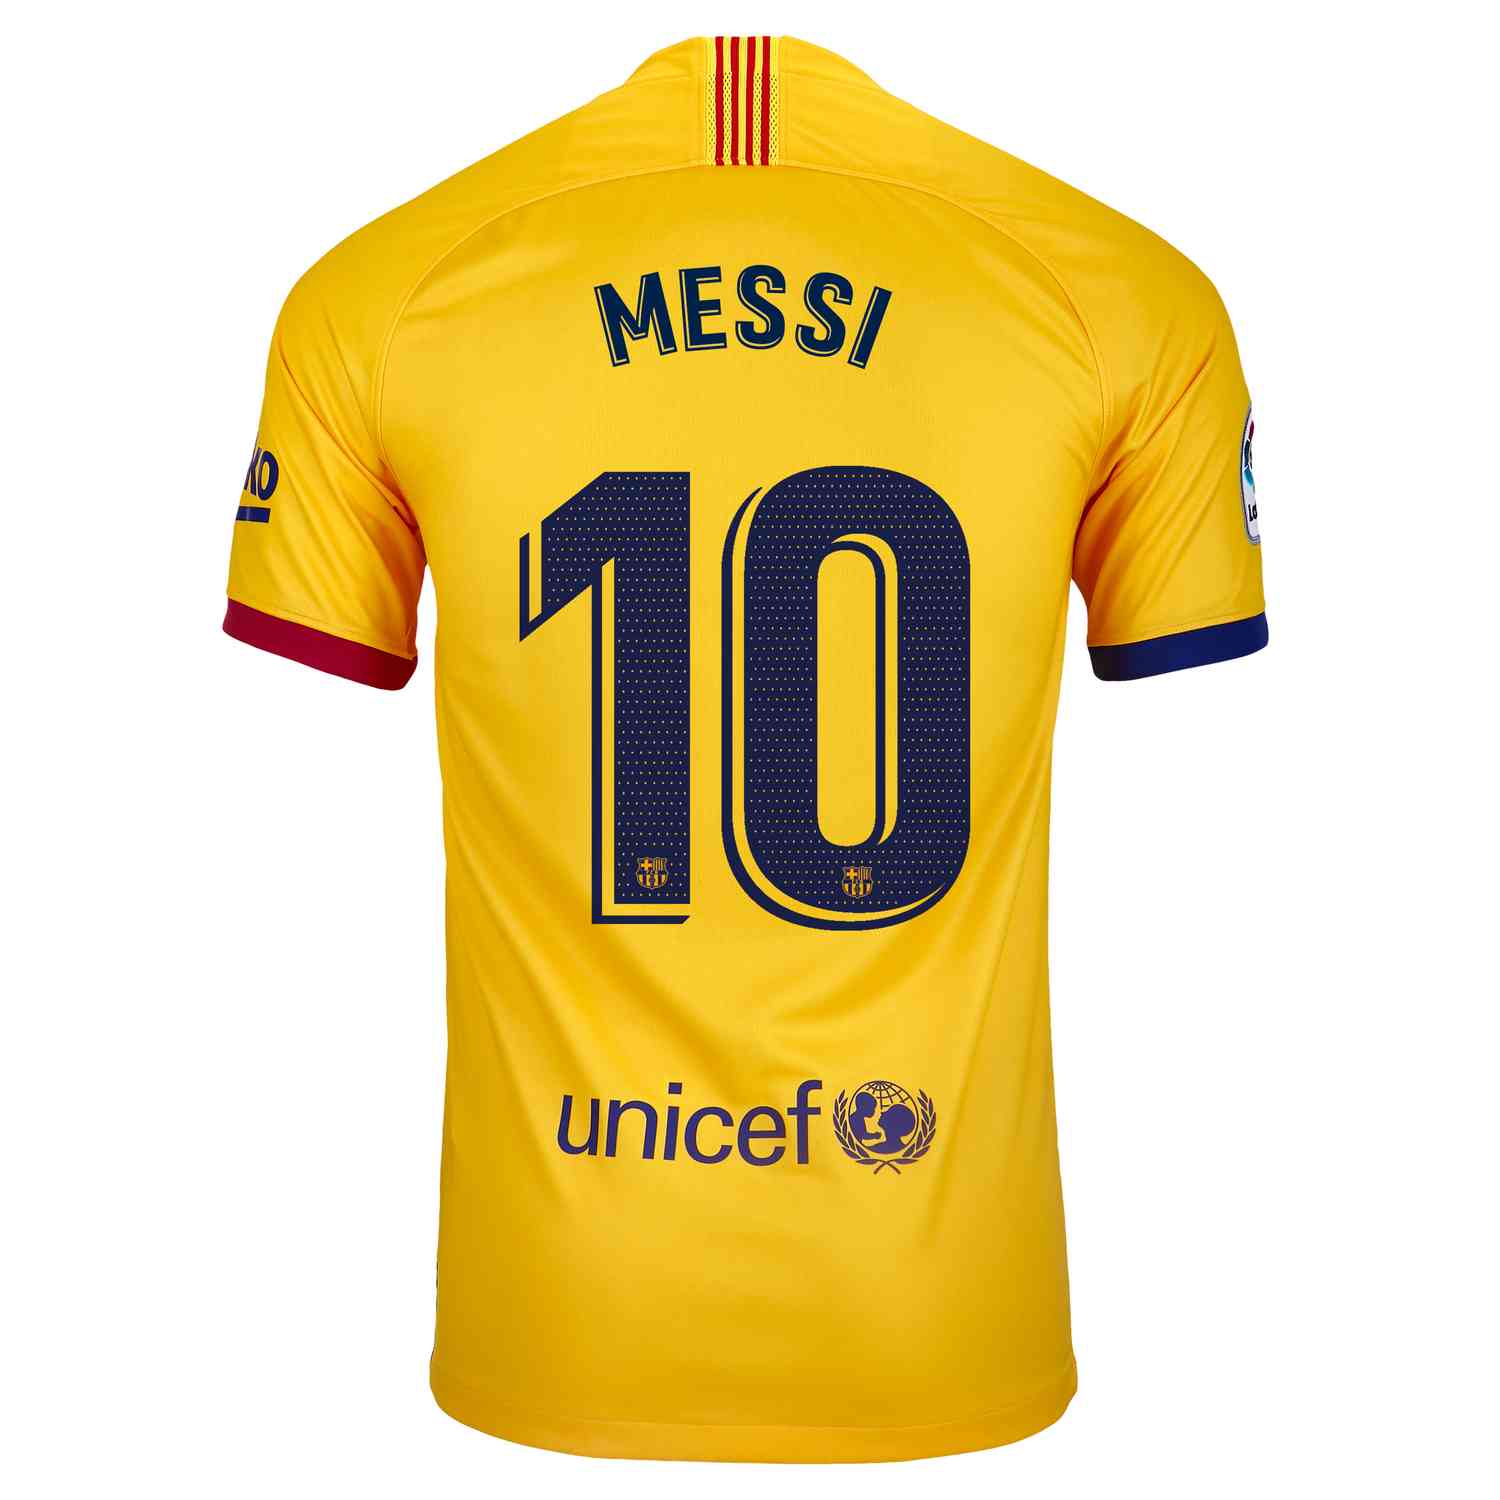 2019/20 Nike Lionel Messi Barcelona 